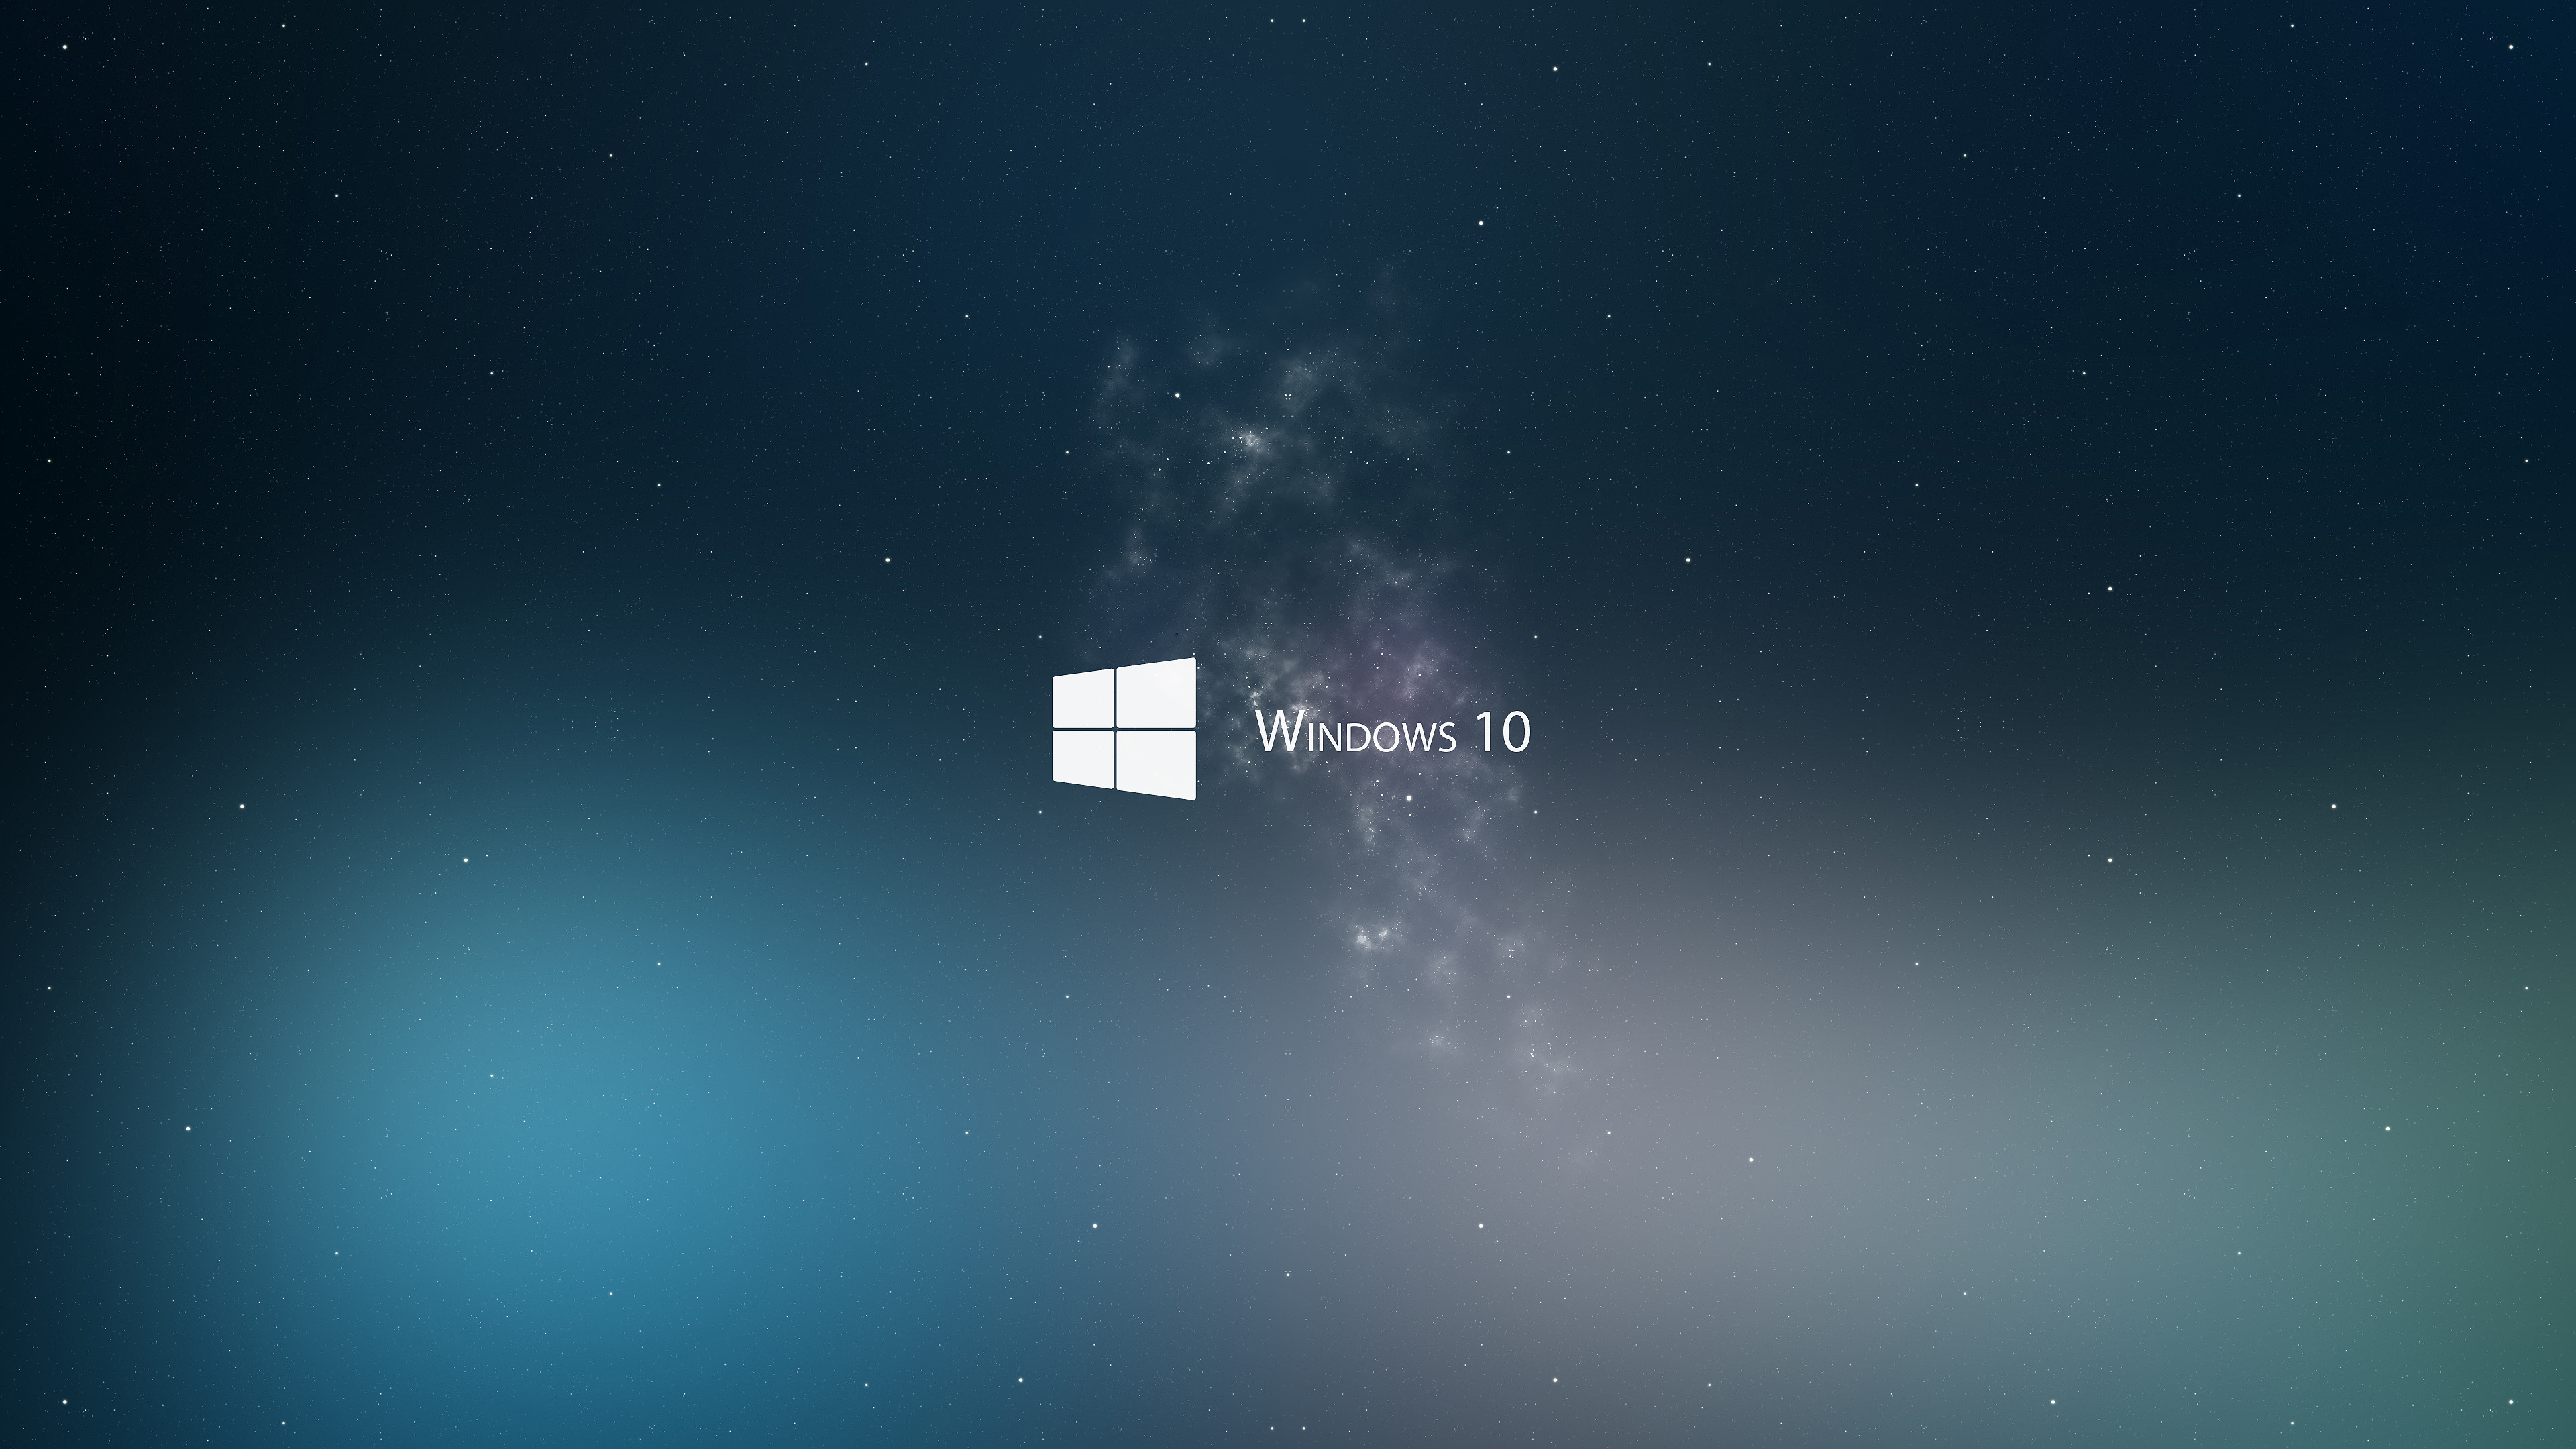 Download Windows 10 HD wallpaper for 4K 3840 x 2160   HDwallpapersnet